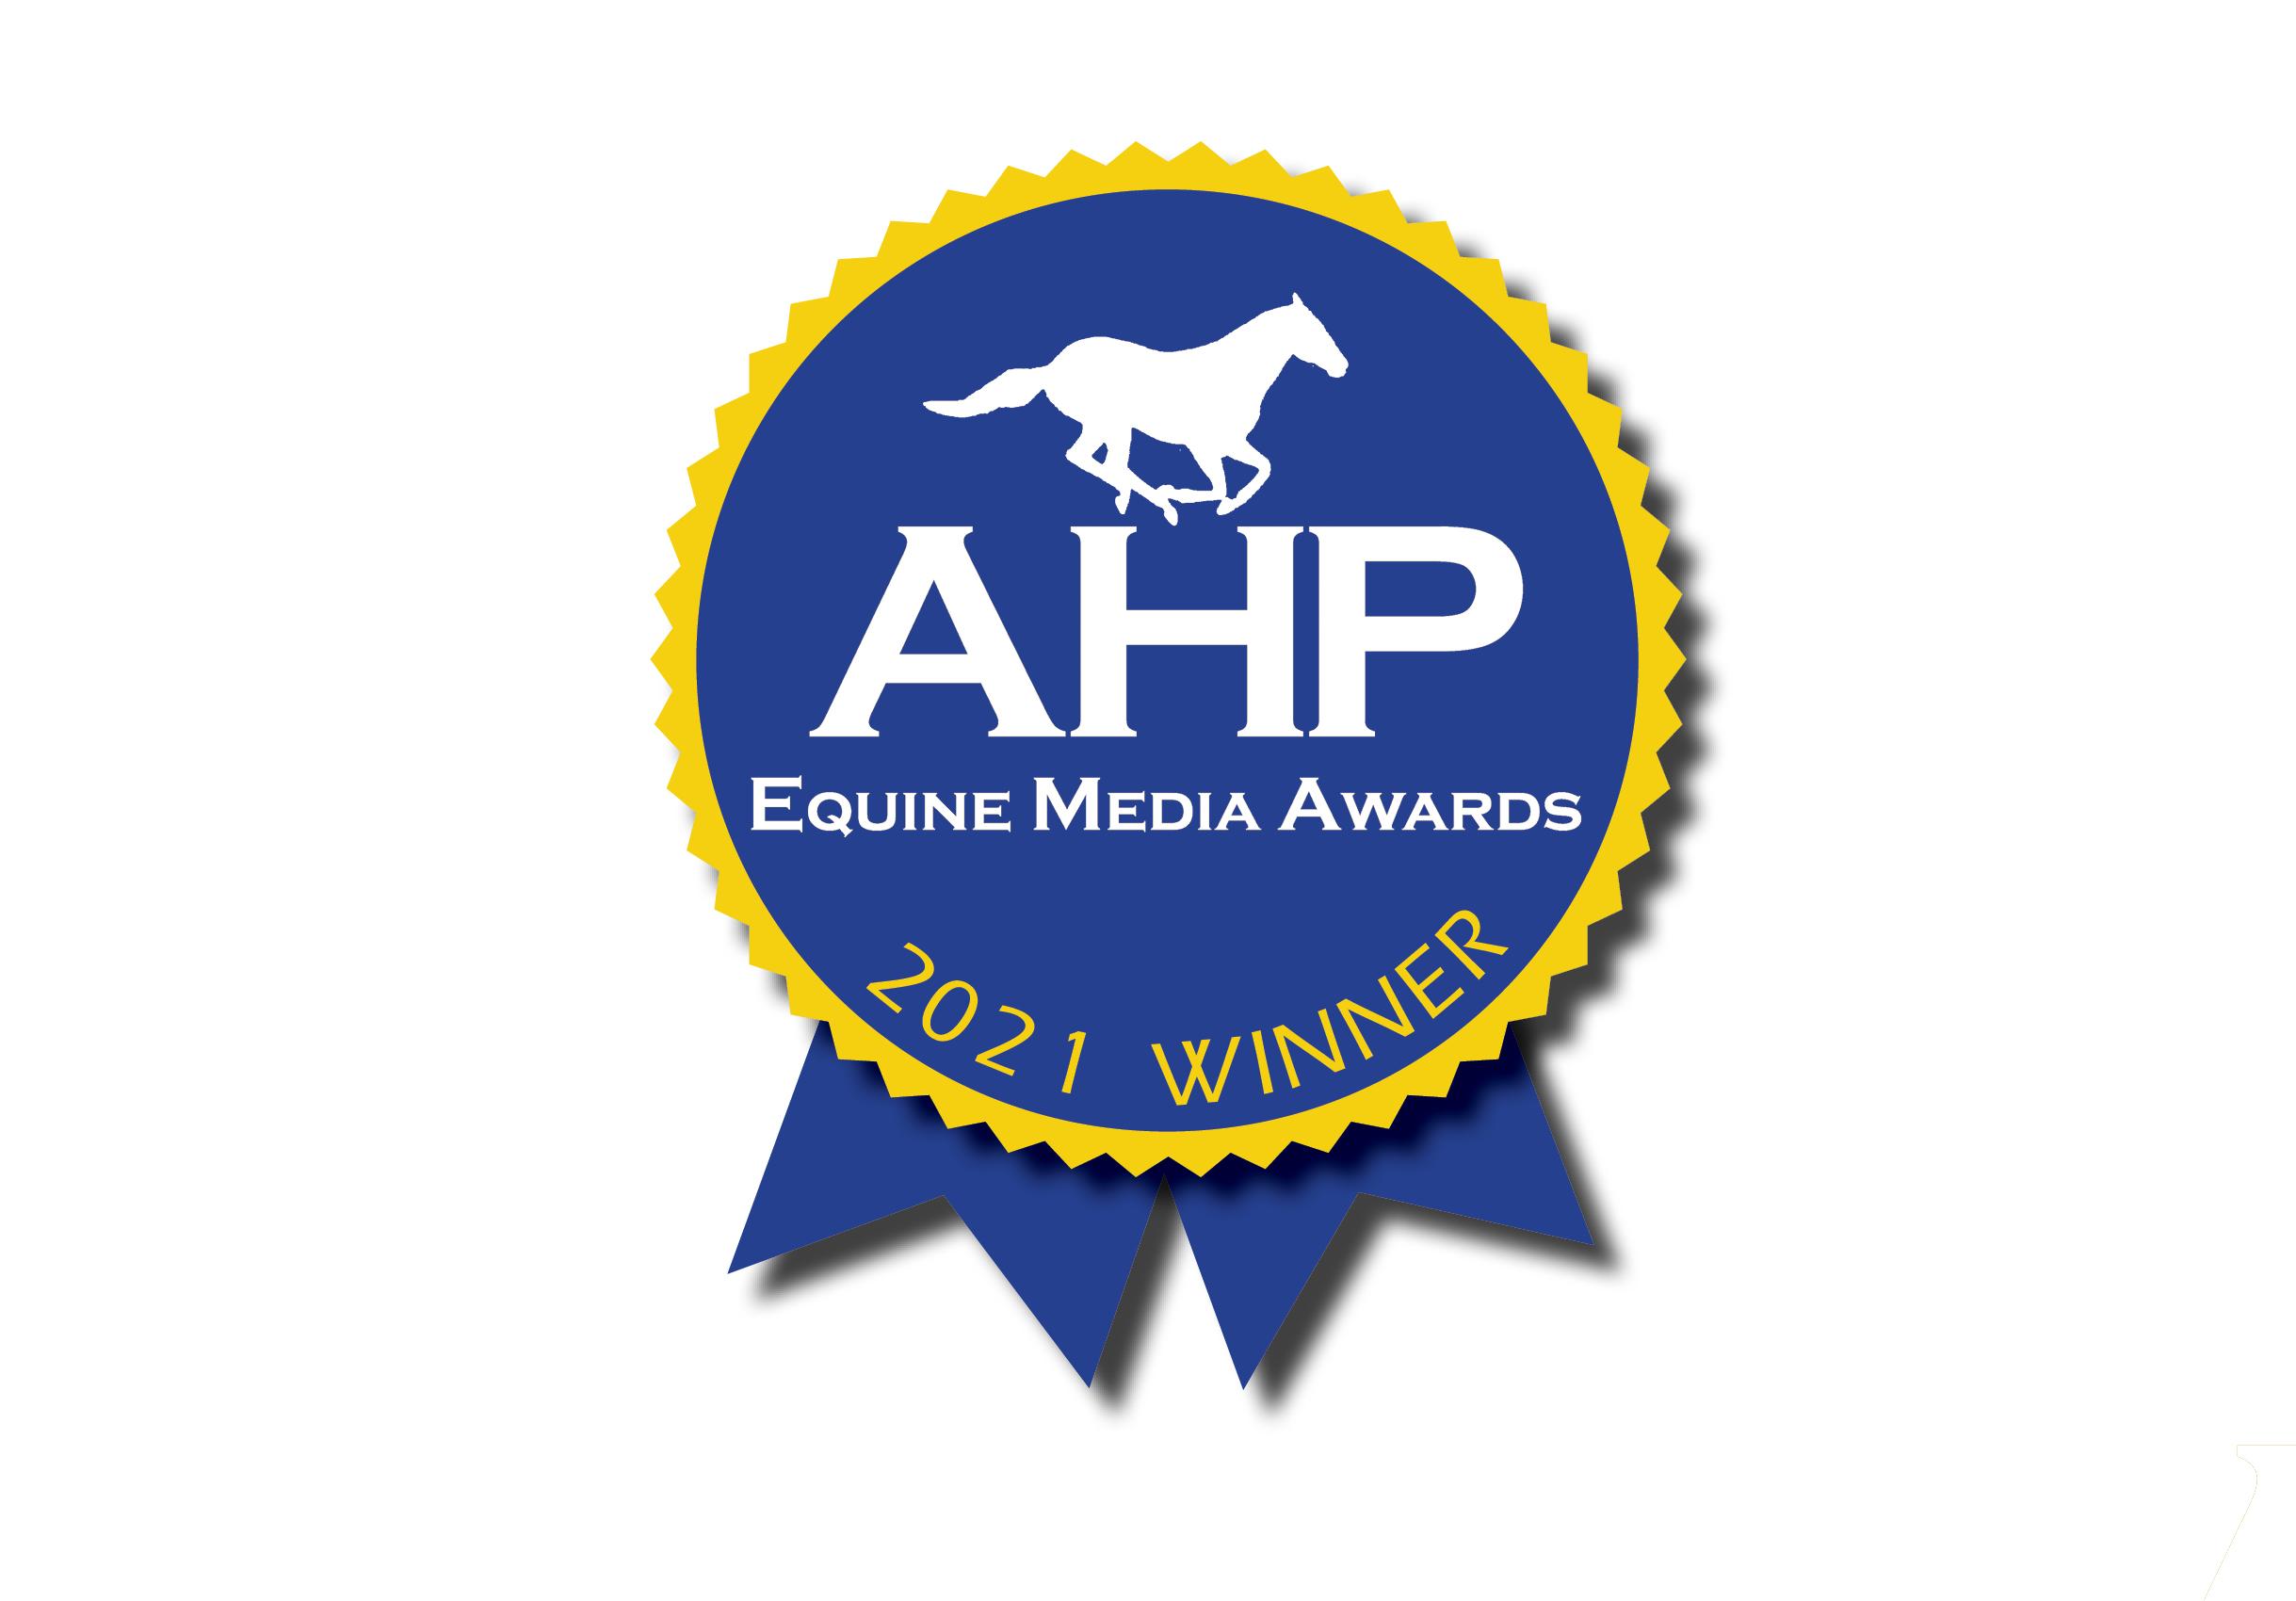 AHP Equine Media Awards Ribbon